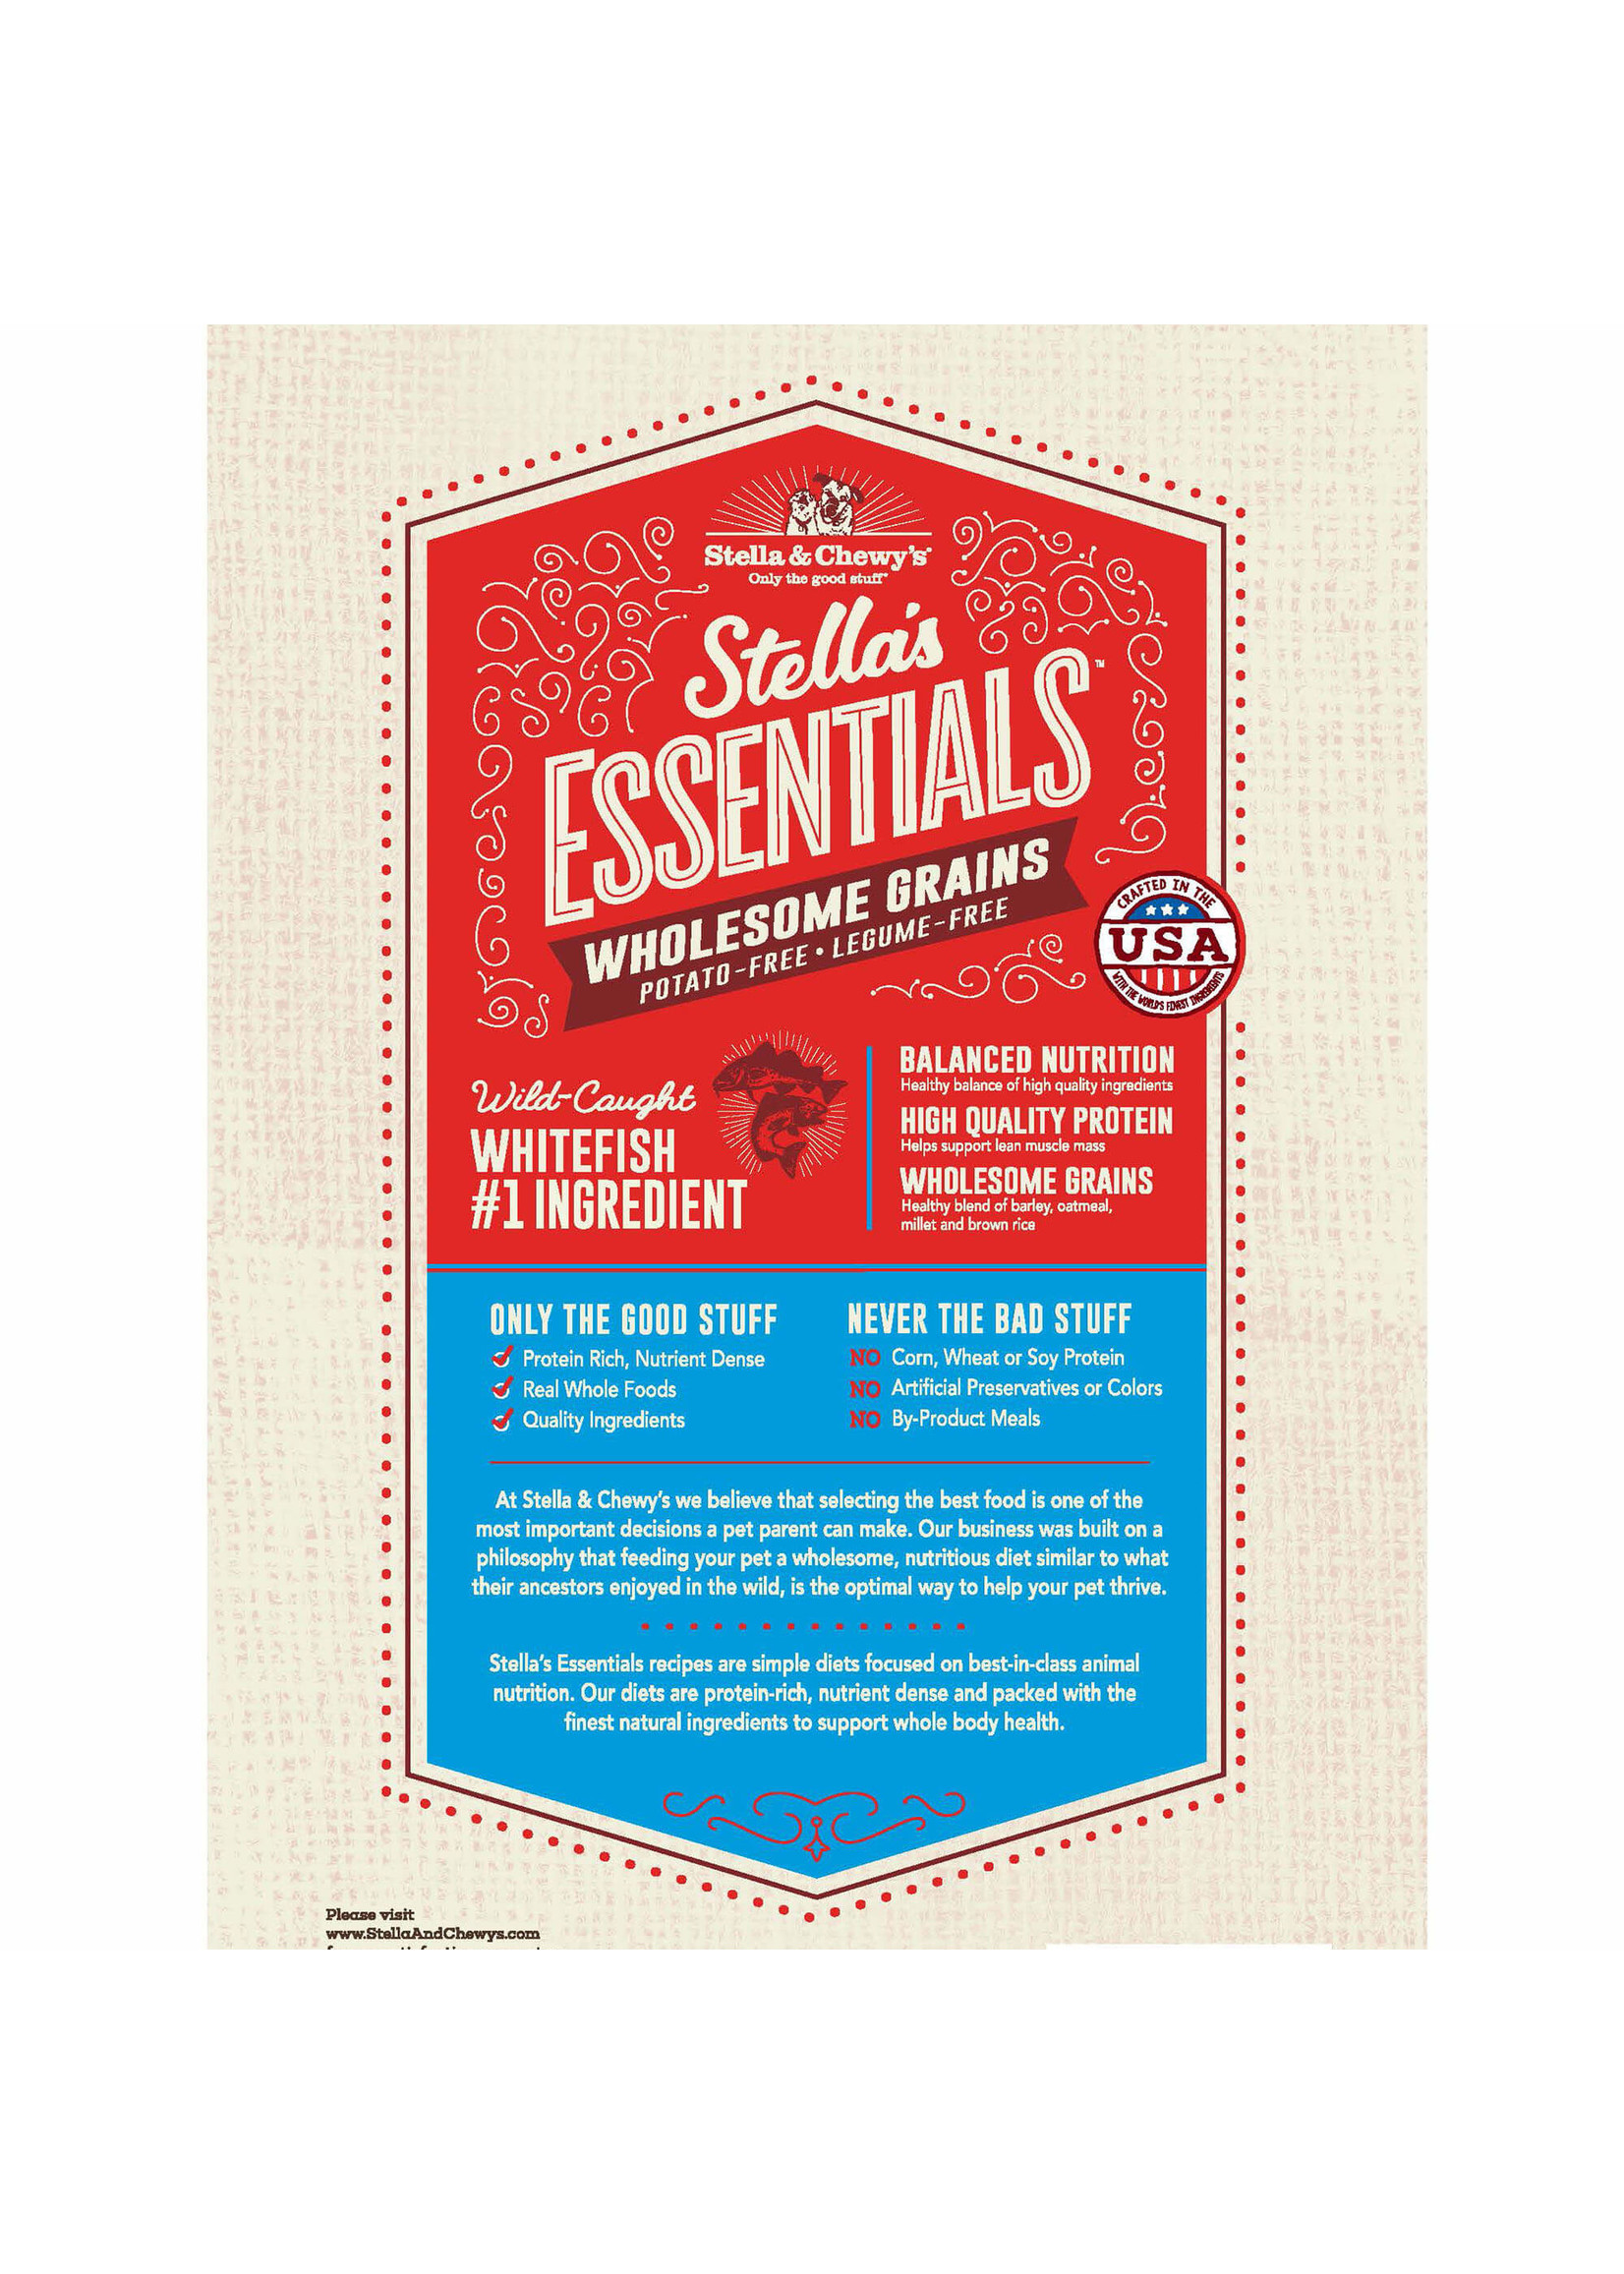 Stella & Chewy's Stella & Chewy's Whitefish w/ Salmon & Ancient Grains Essentials